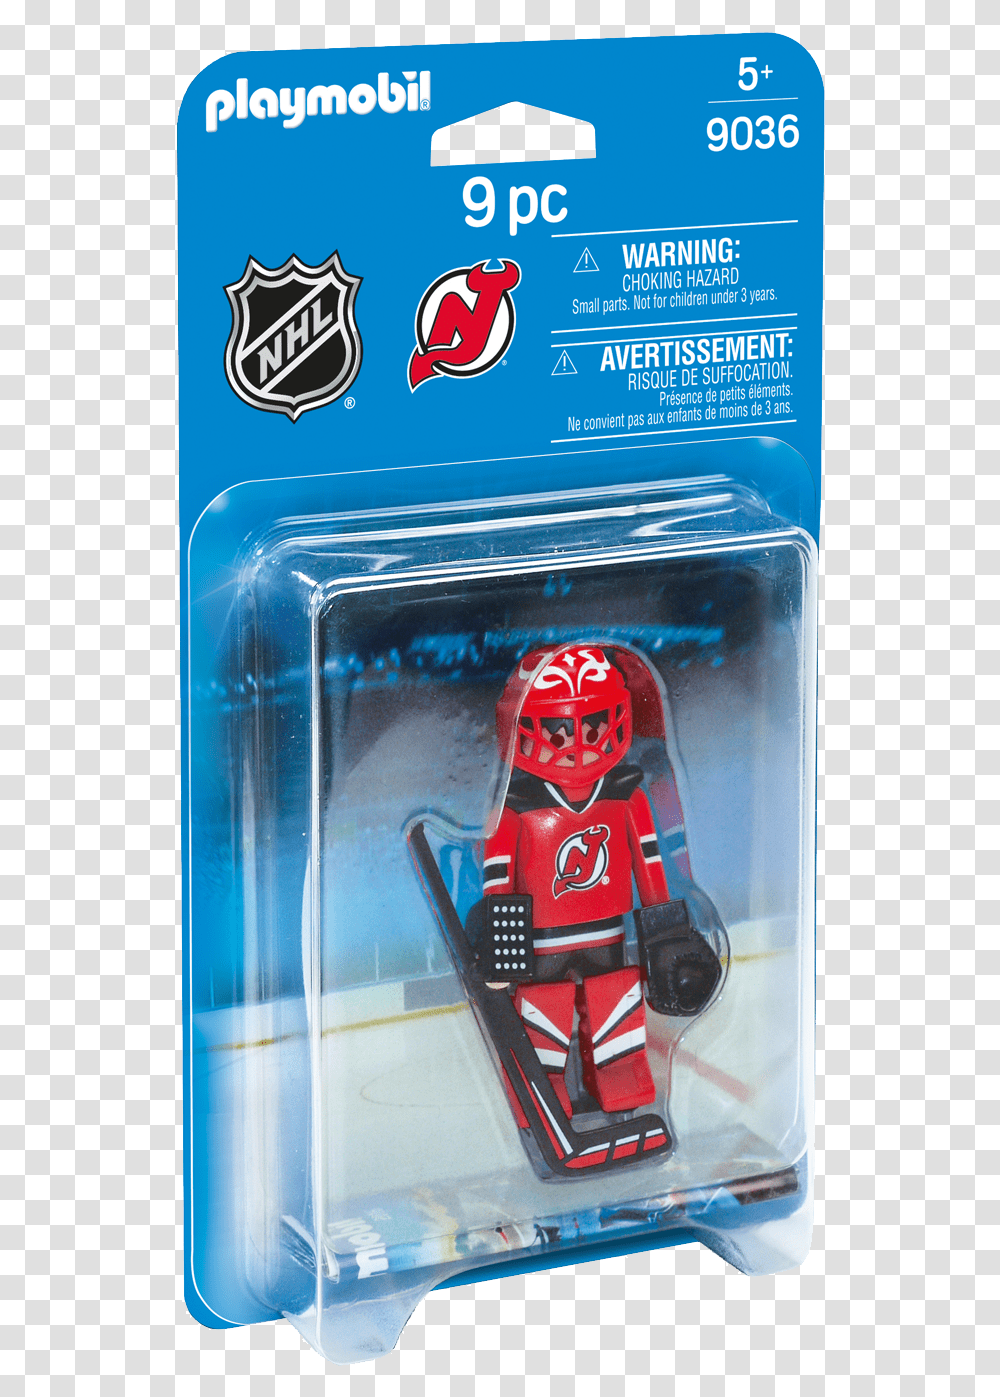 Nhl New Jersey Devils Goalie 9036 Playmobil Usa Playmobil Winnipeg Jets, Person, Human, Helmet, Clothing Transparent Png